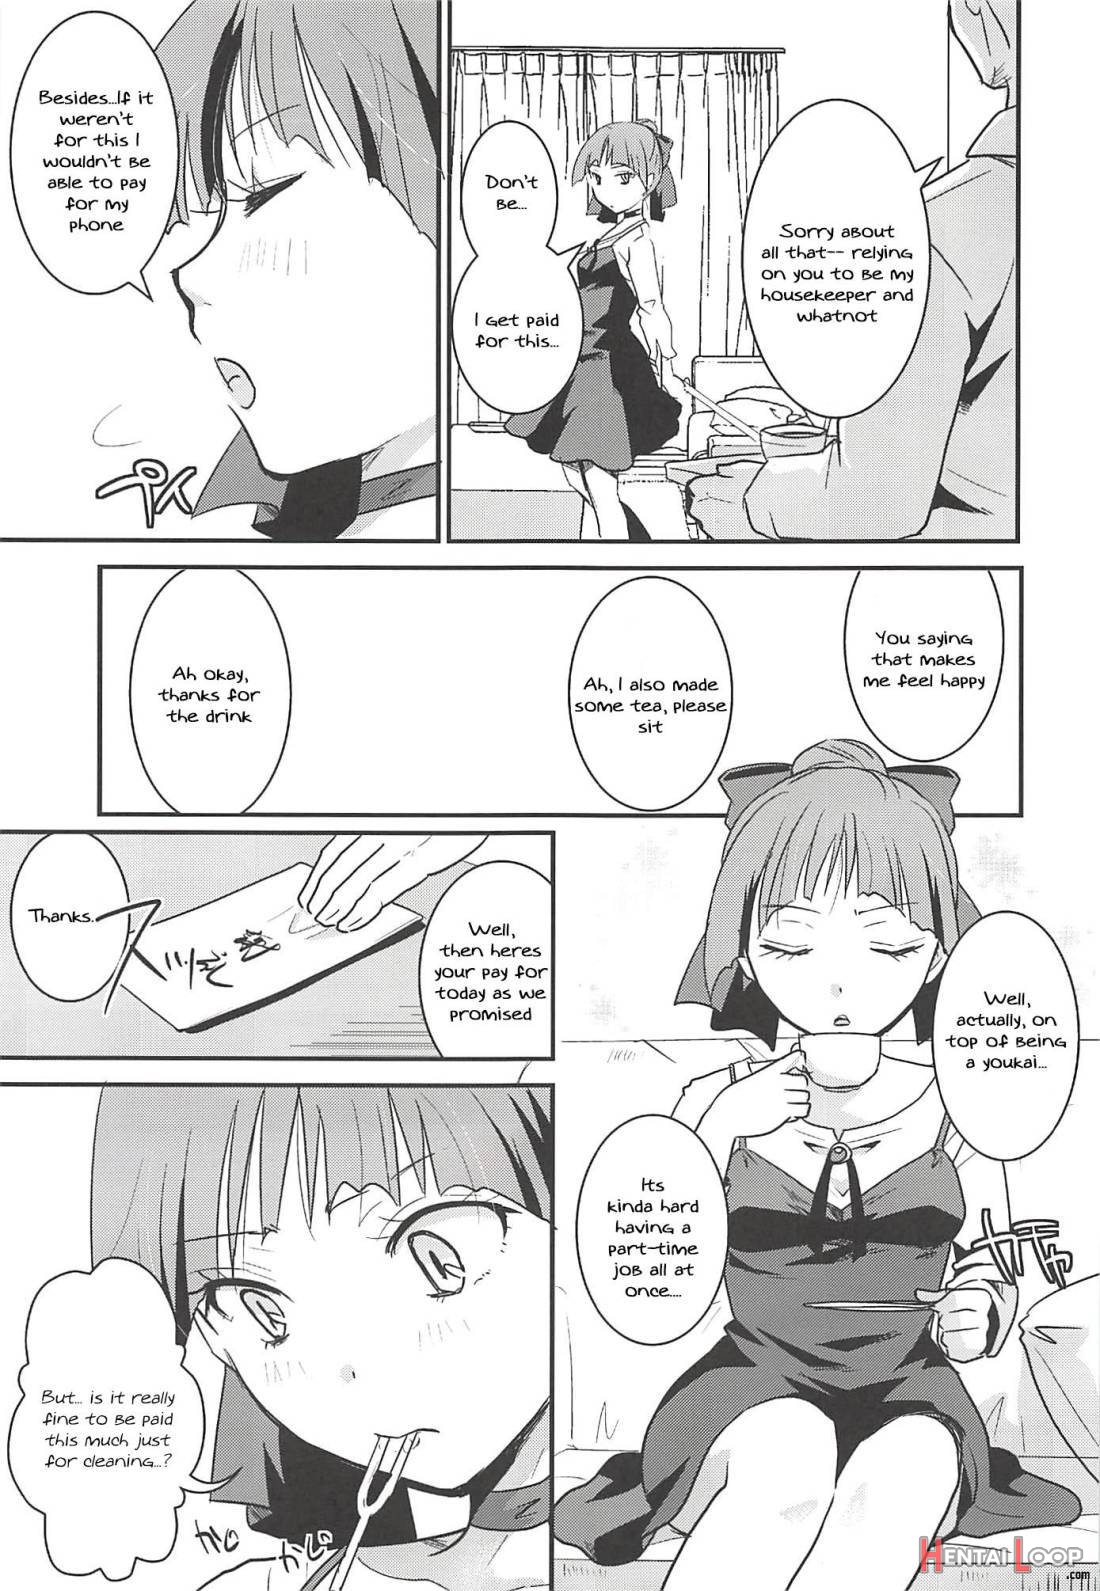 Neko Musume Suikan page 5